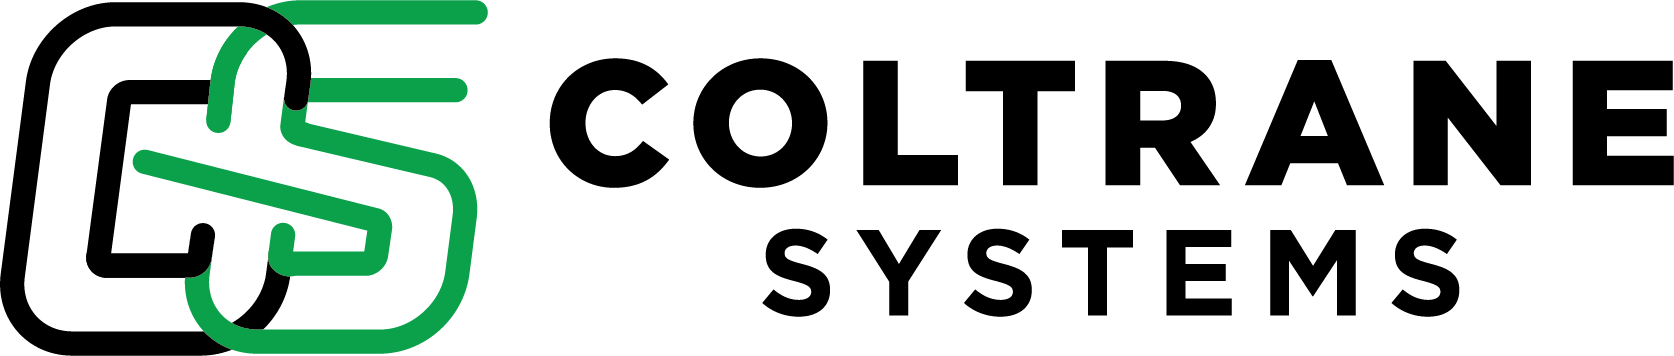 Coltrane Systems logo